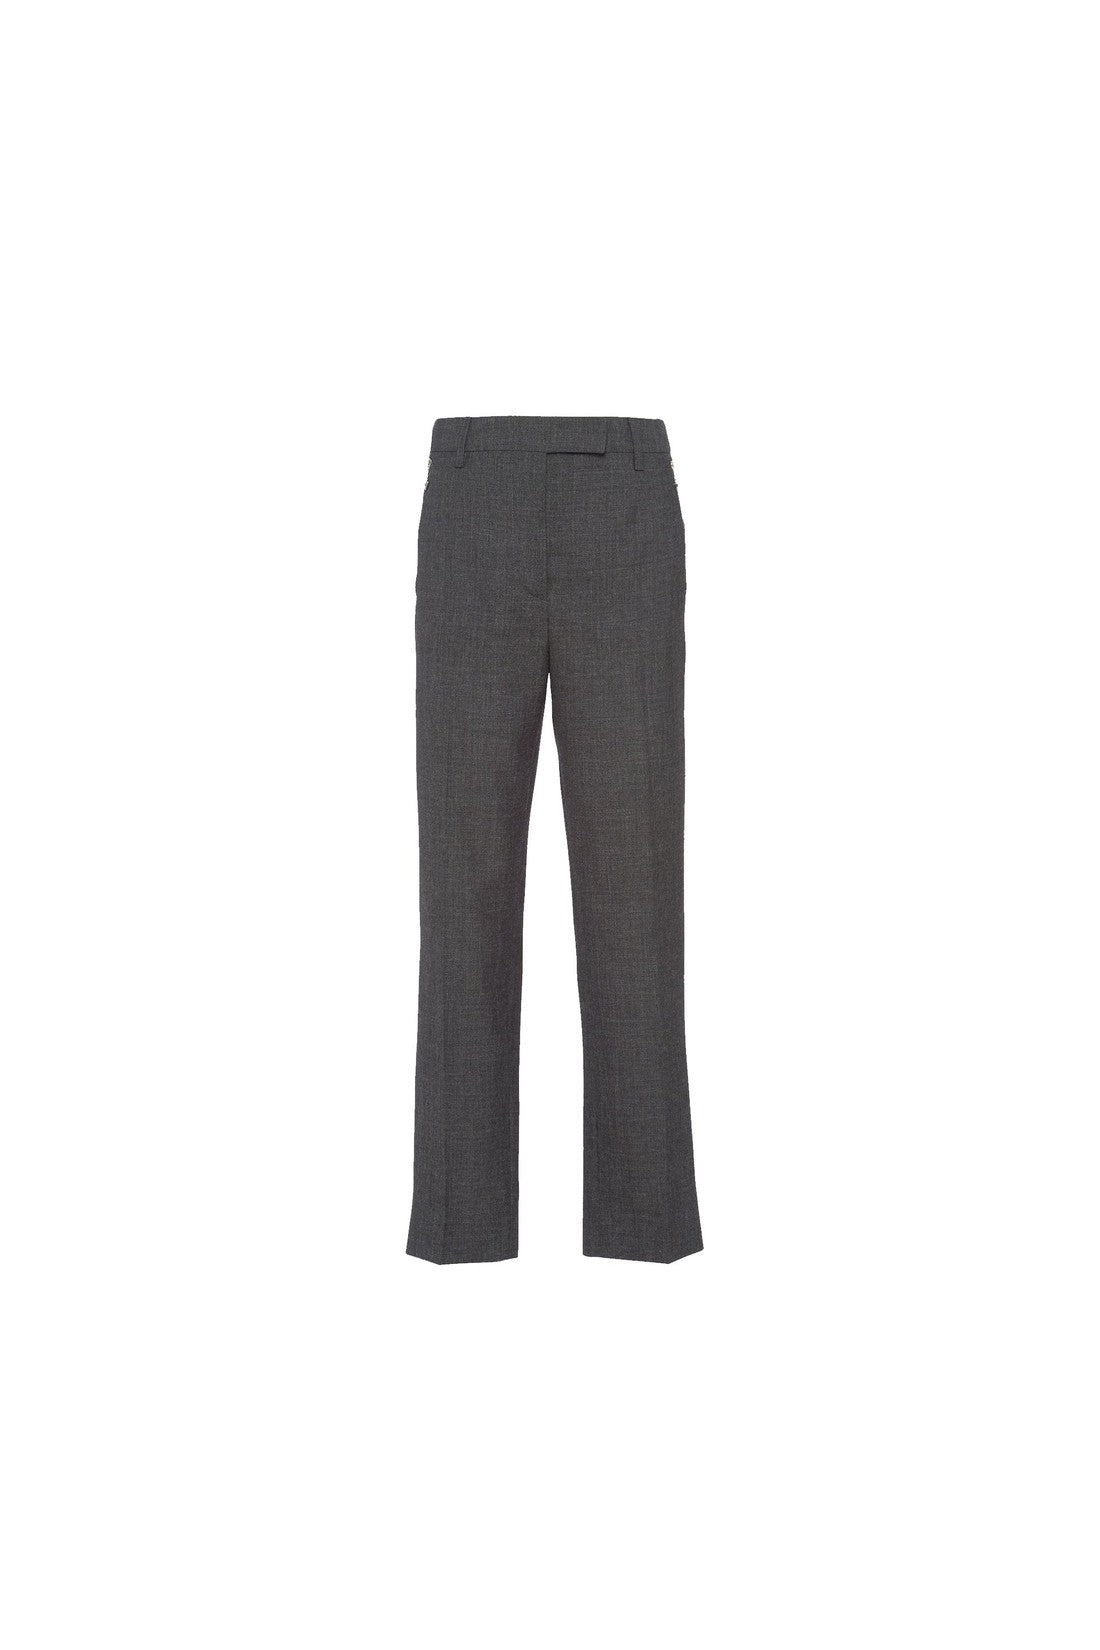 PRADA-Outlet-Sale-Prada Wool Pants-WOMEN CLOTHING-GREY-42-ARCHIVIST